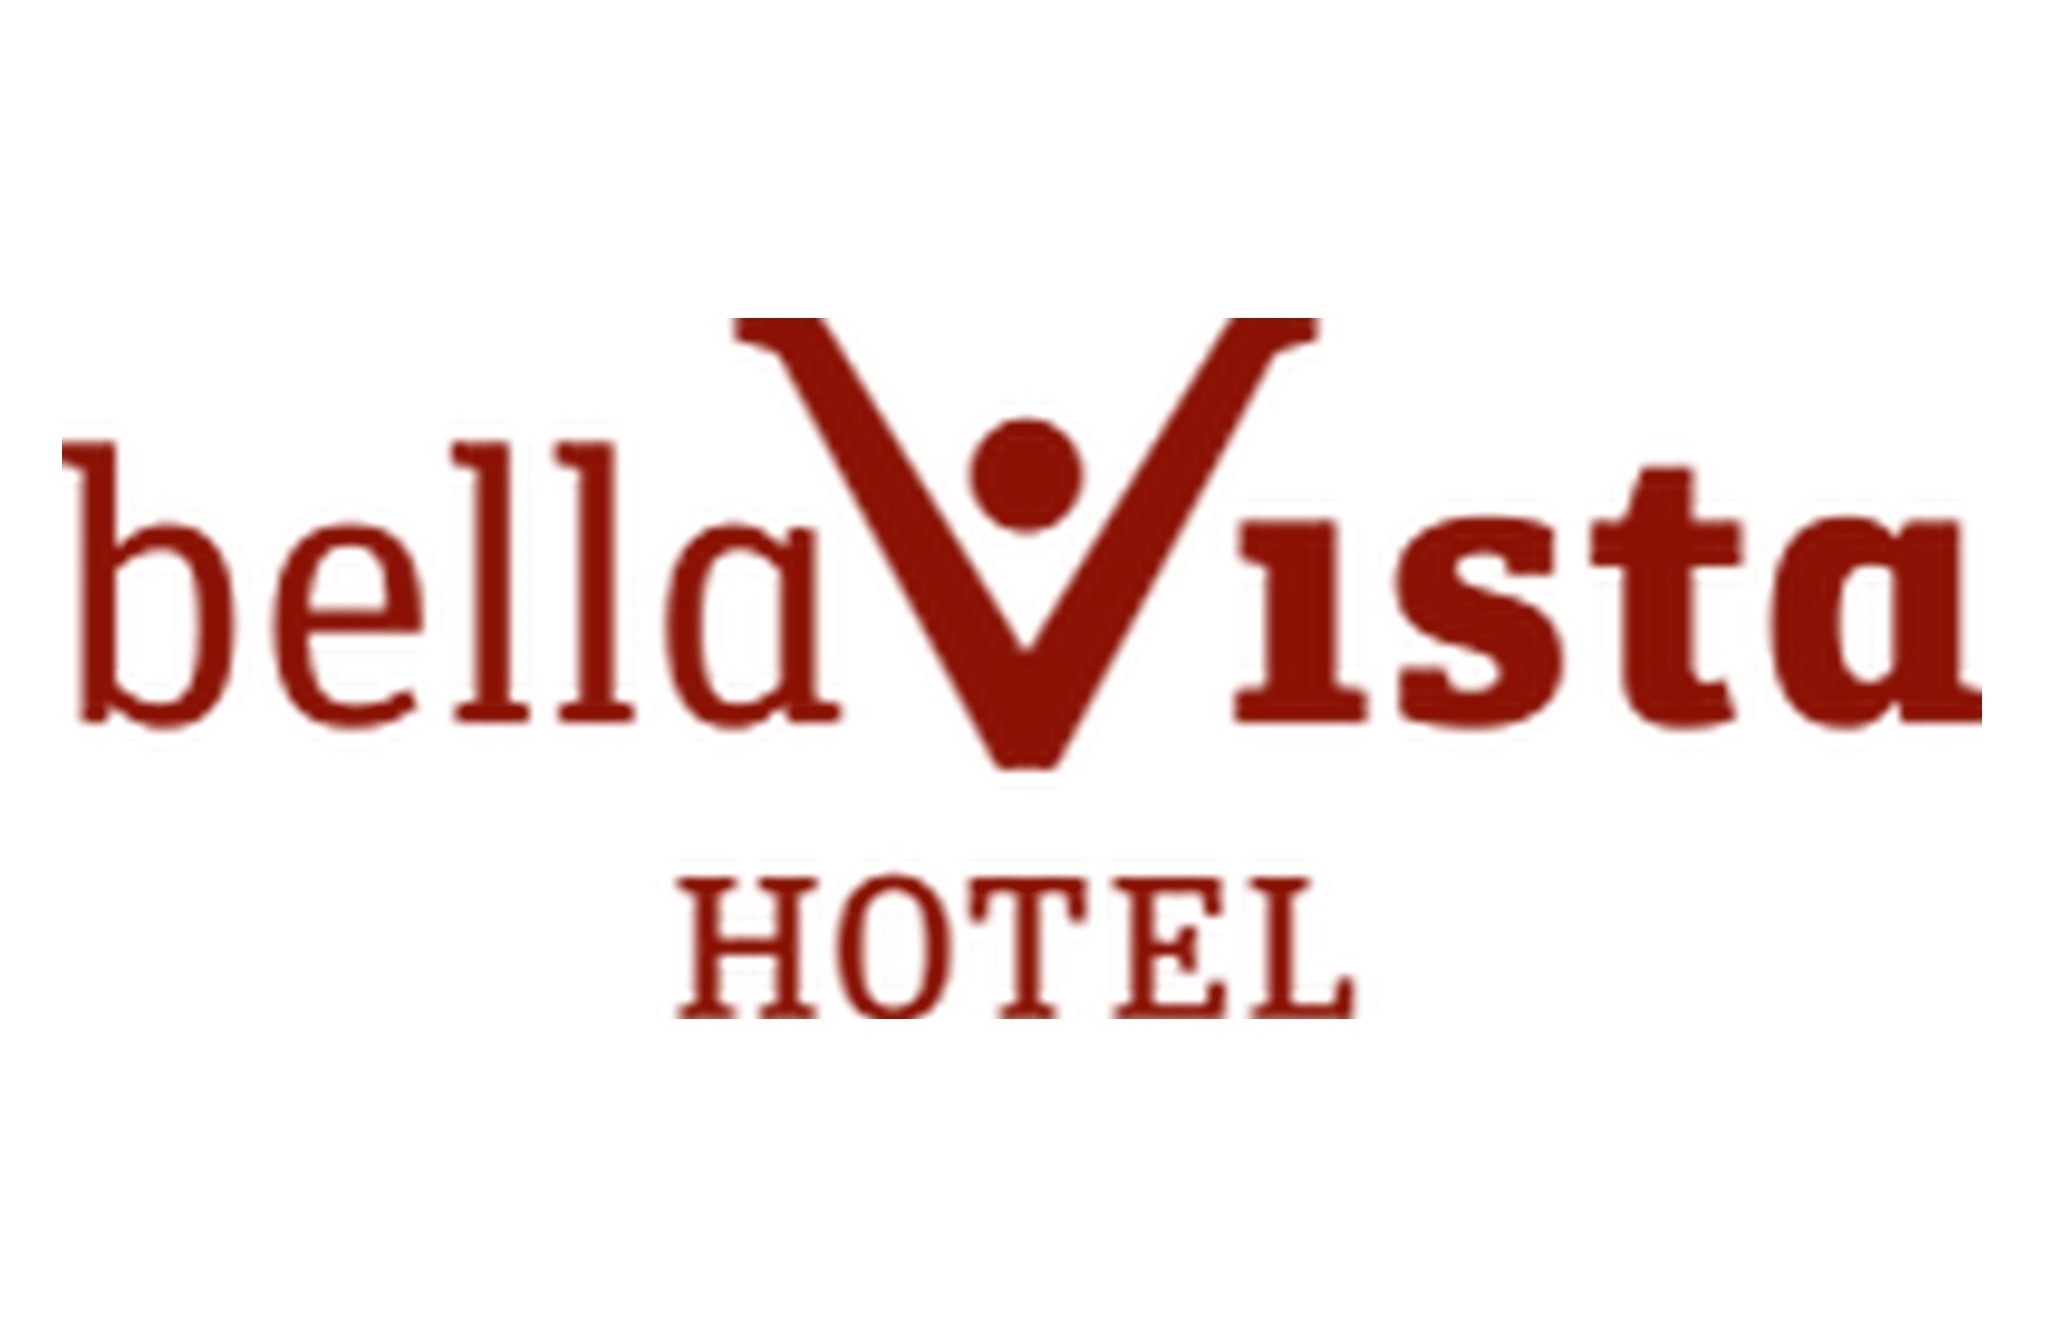 Familienhotel Bella Vista Logo